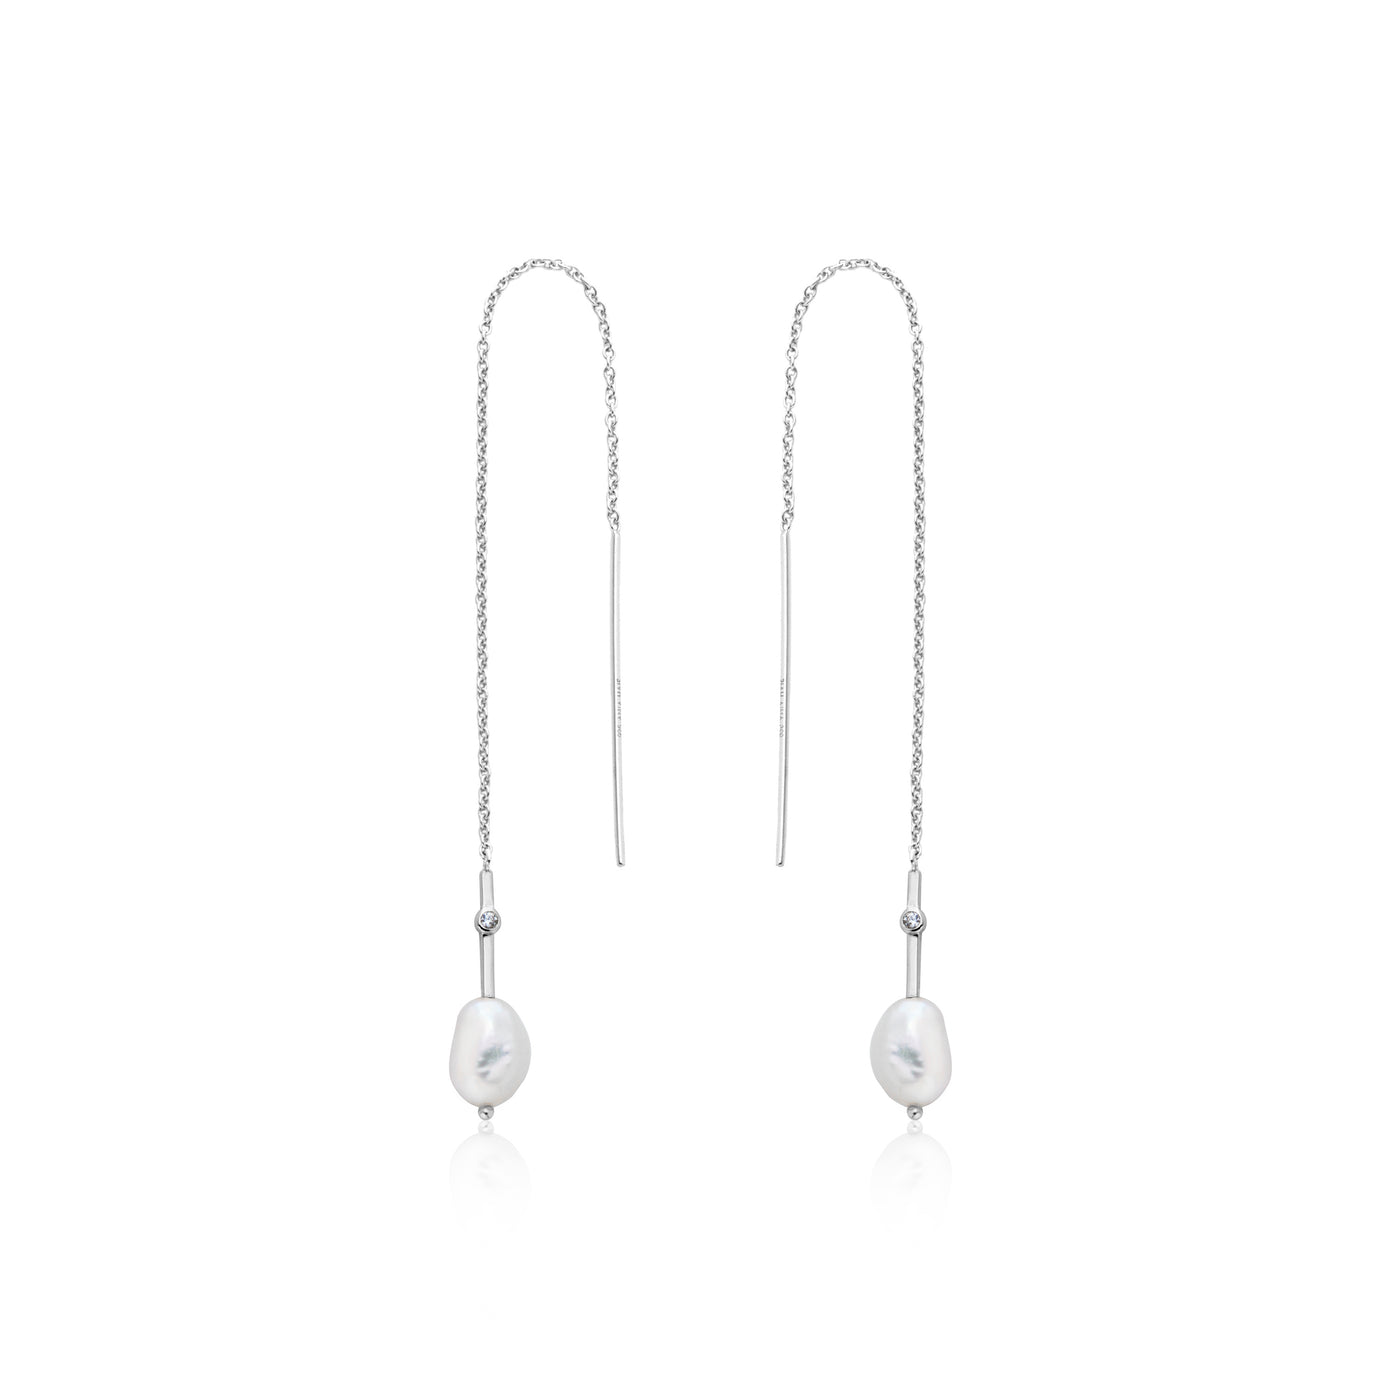 Ania Haie Silver Drop Earrings E019-01H